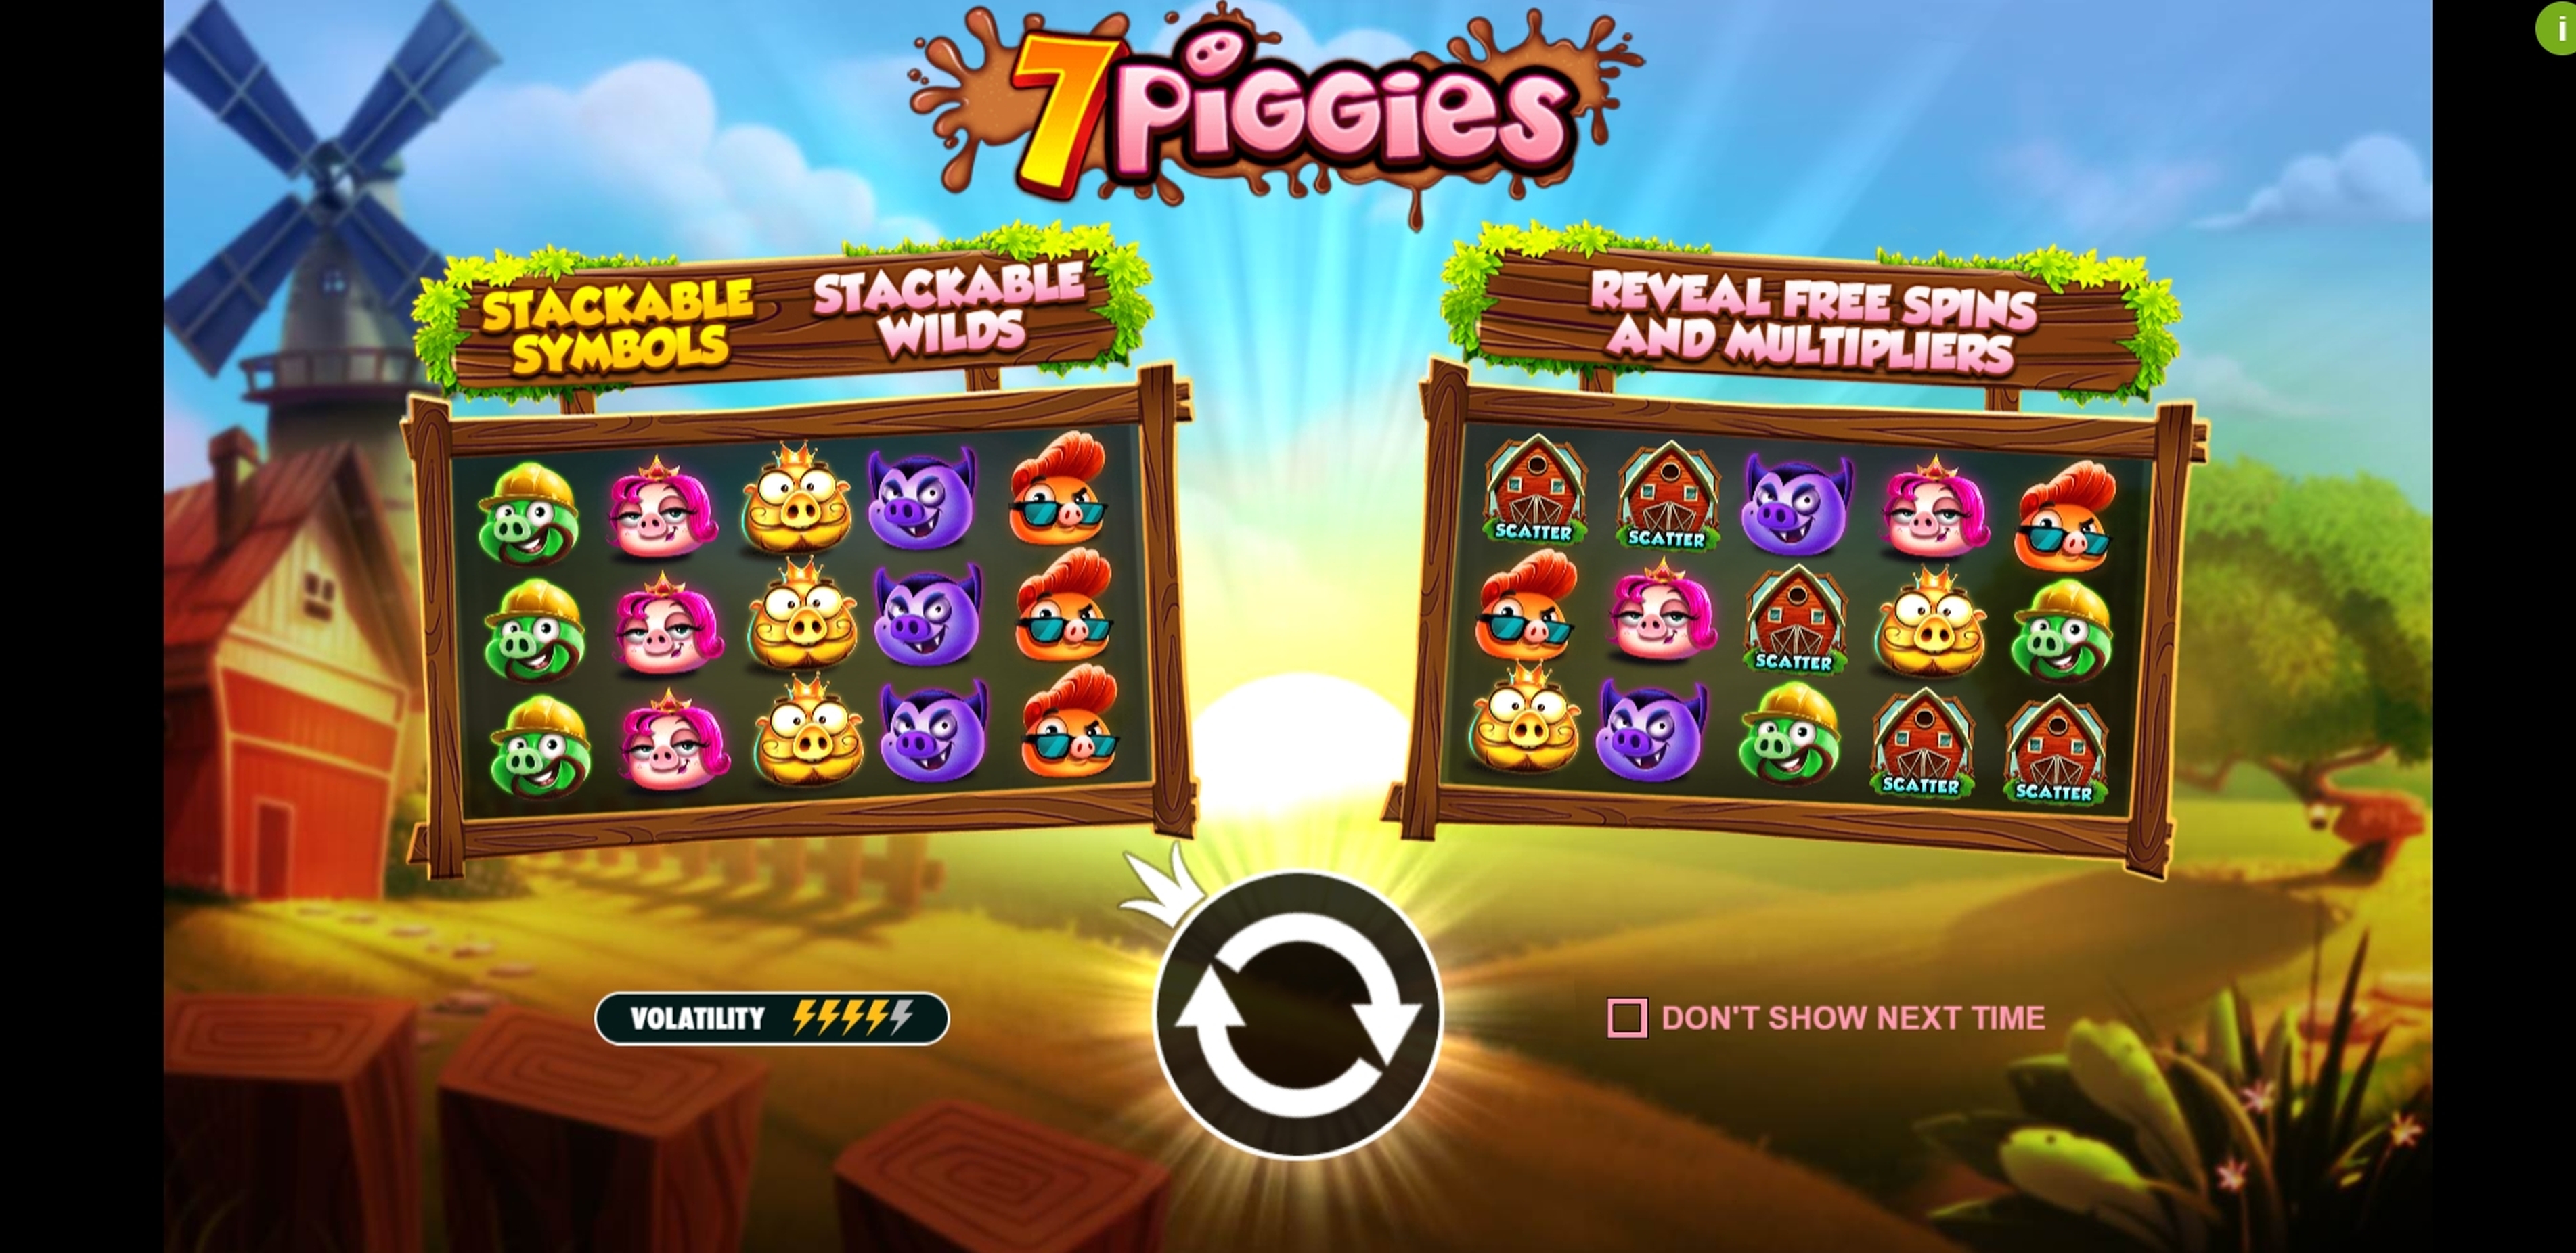 Play 7 Piggies Free Casino Slot Game by Pragmatic Play